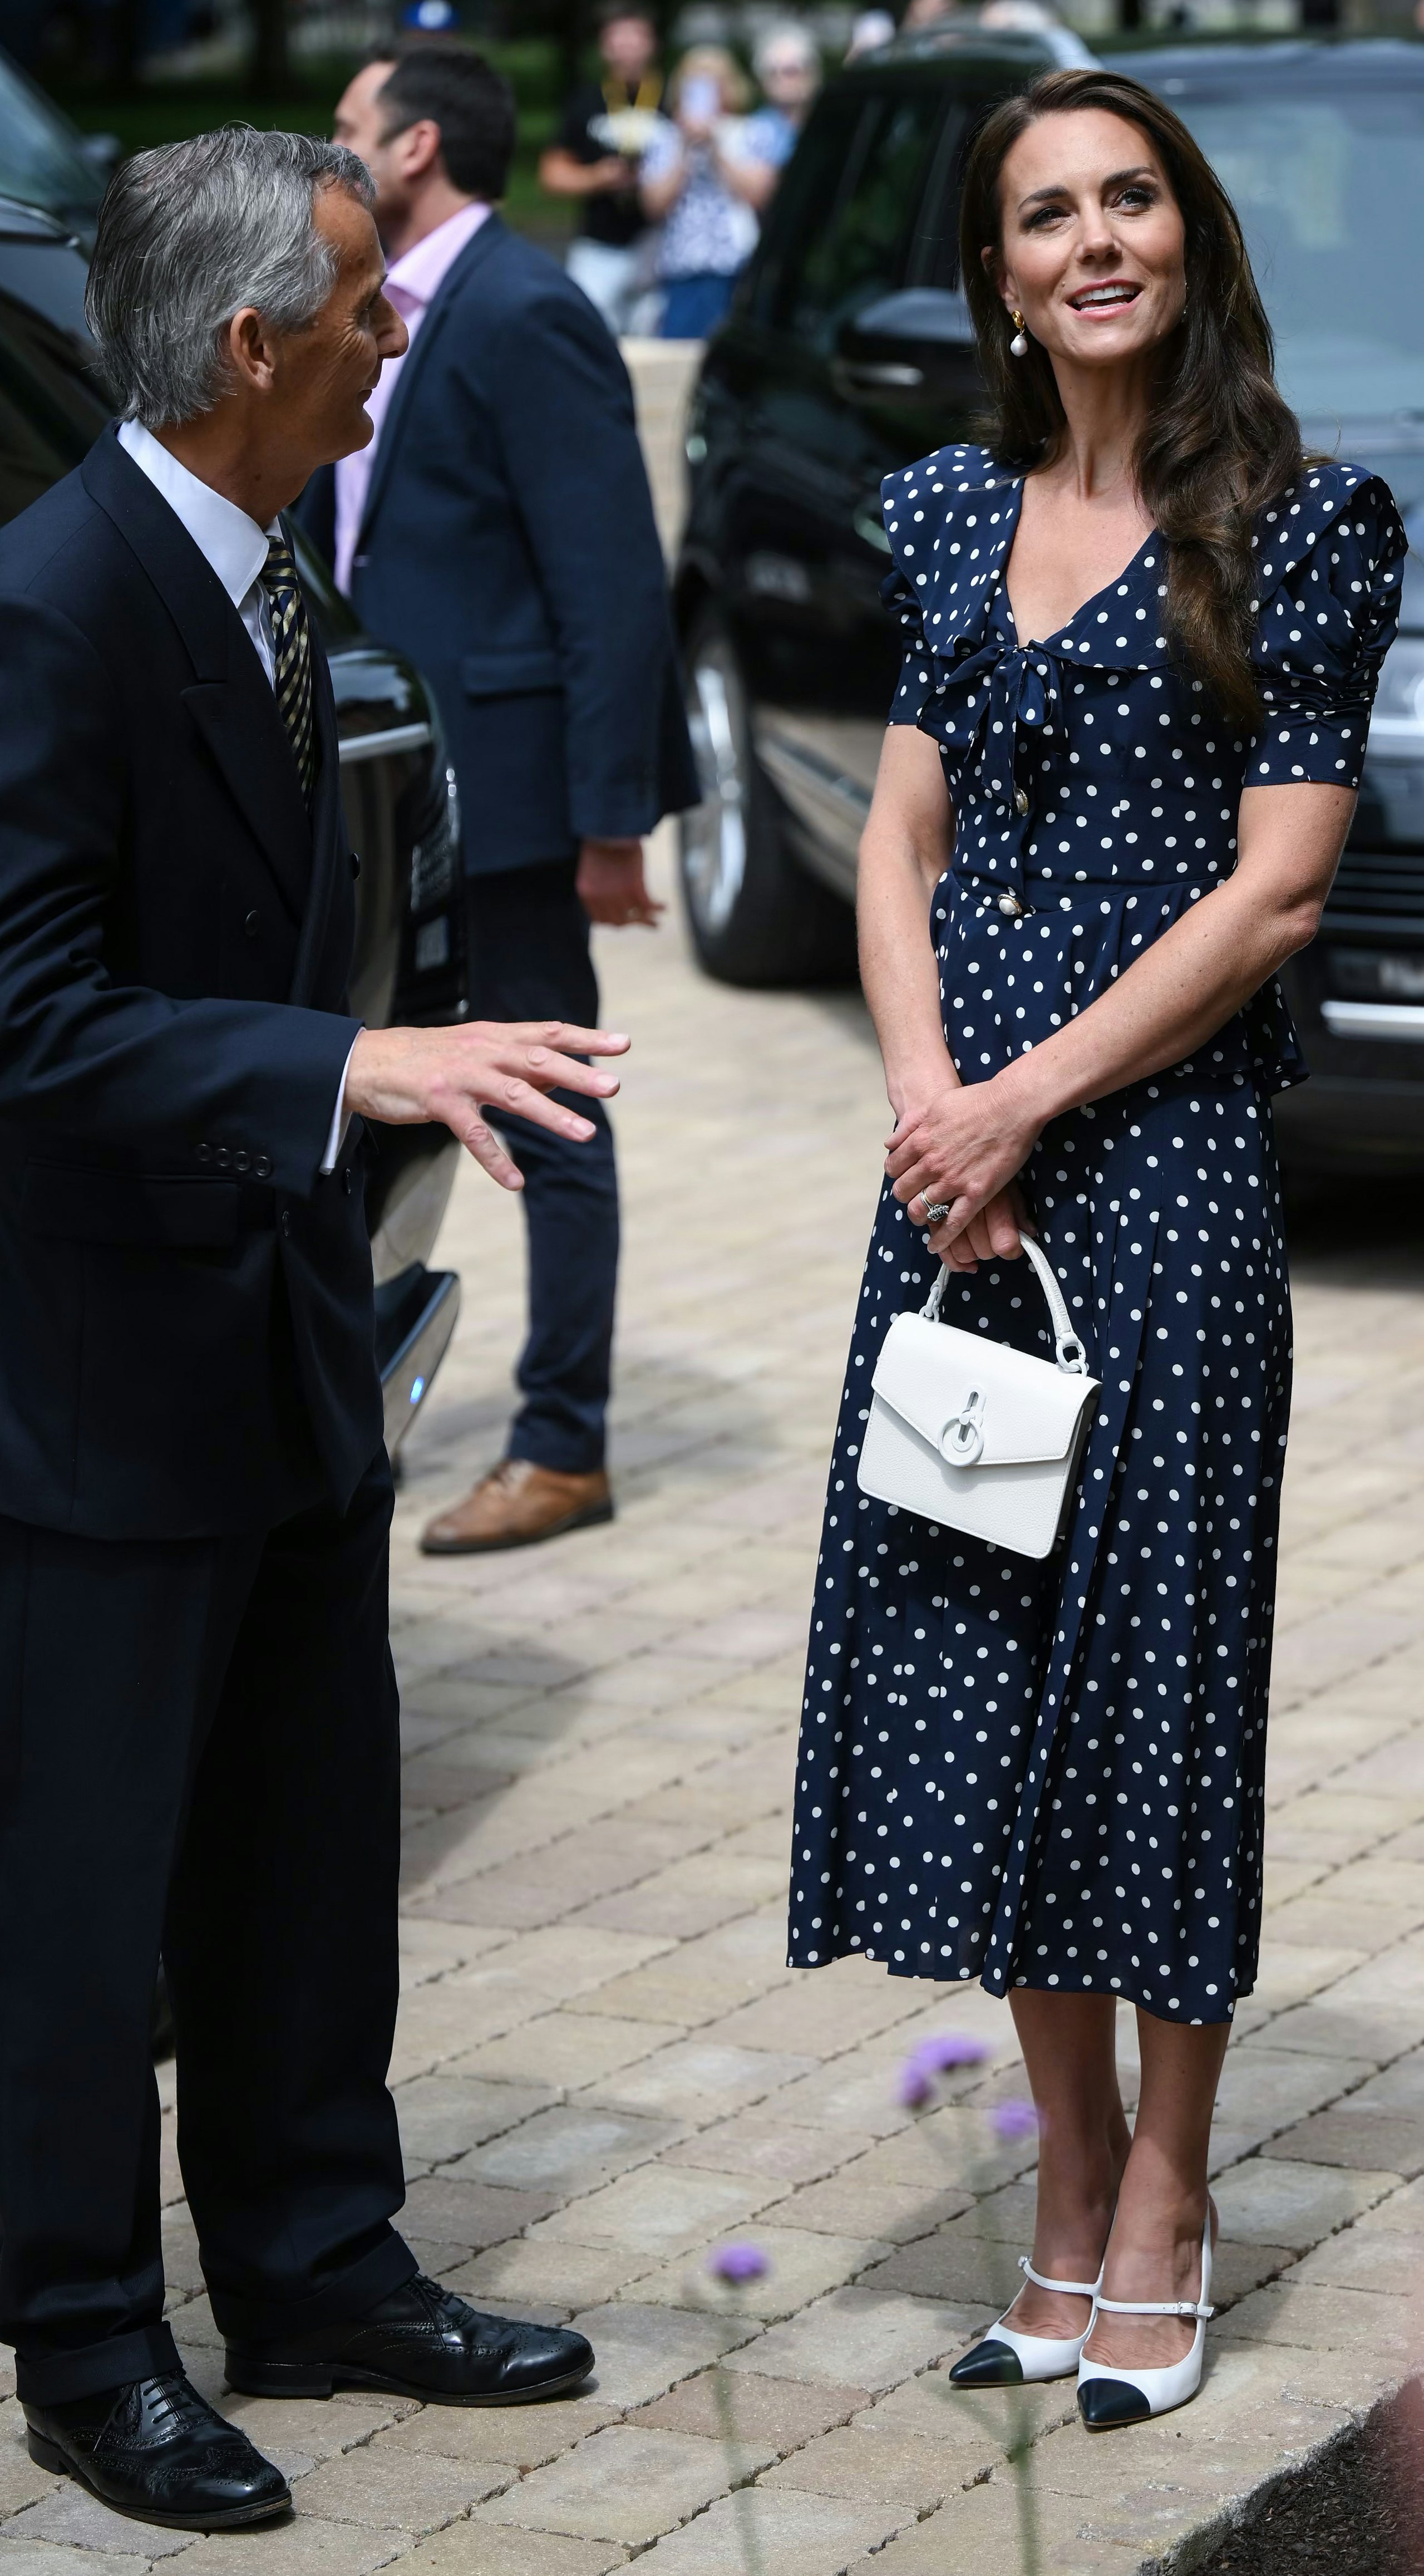 Kate Middleton, The Duchess Of Cambridge's New Polka Dot Dress